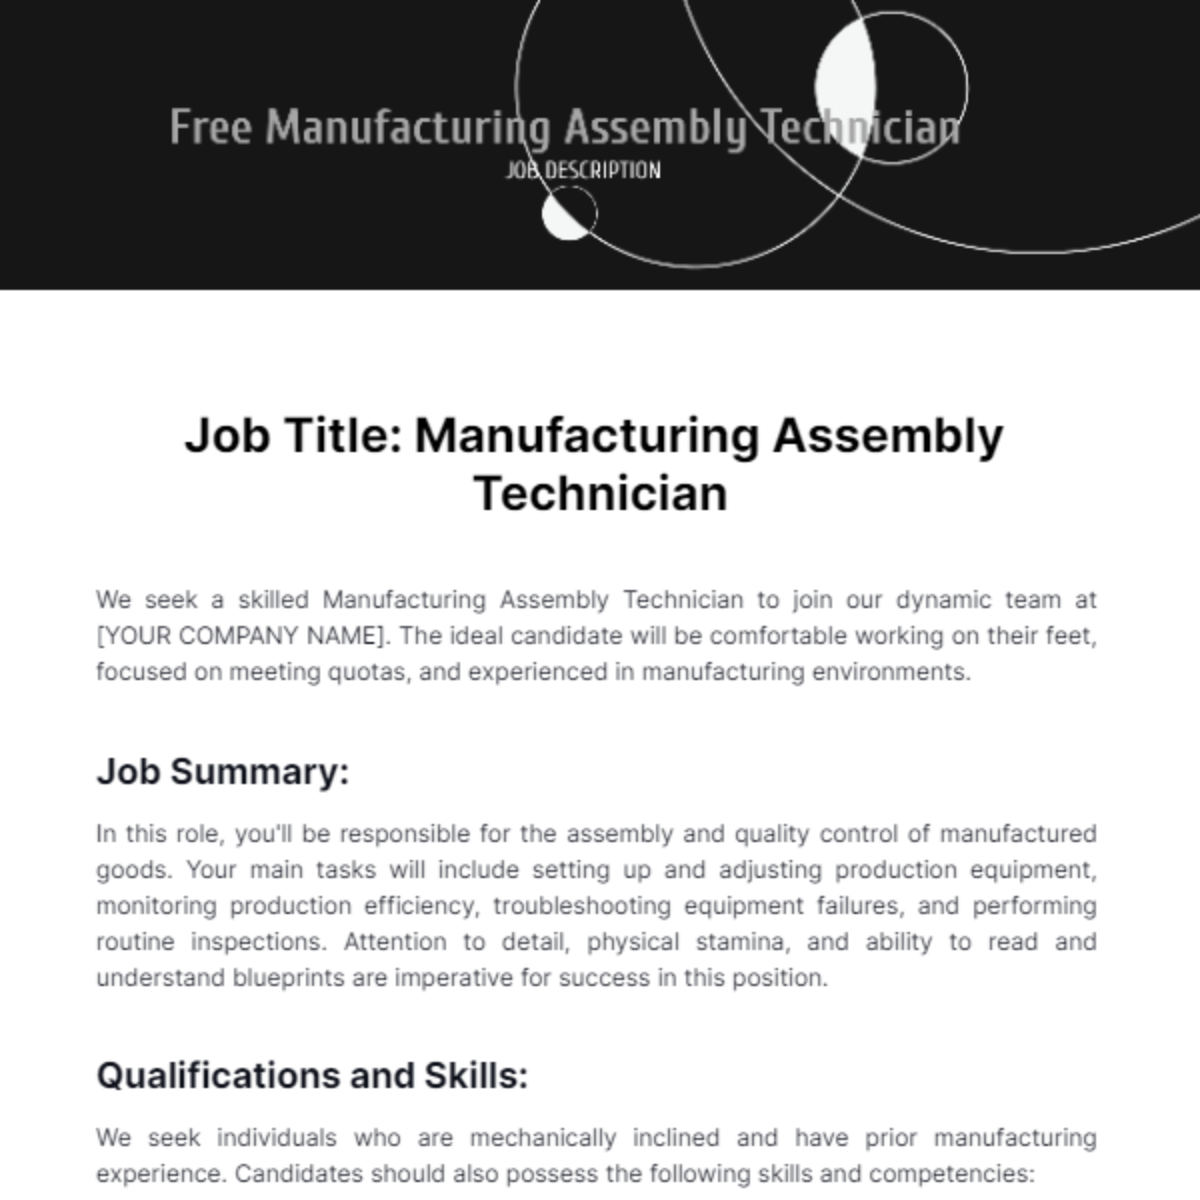 Free Manufacturing Assembly Technician Job Description Template